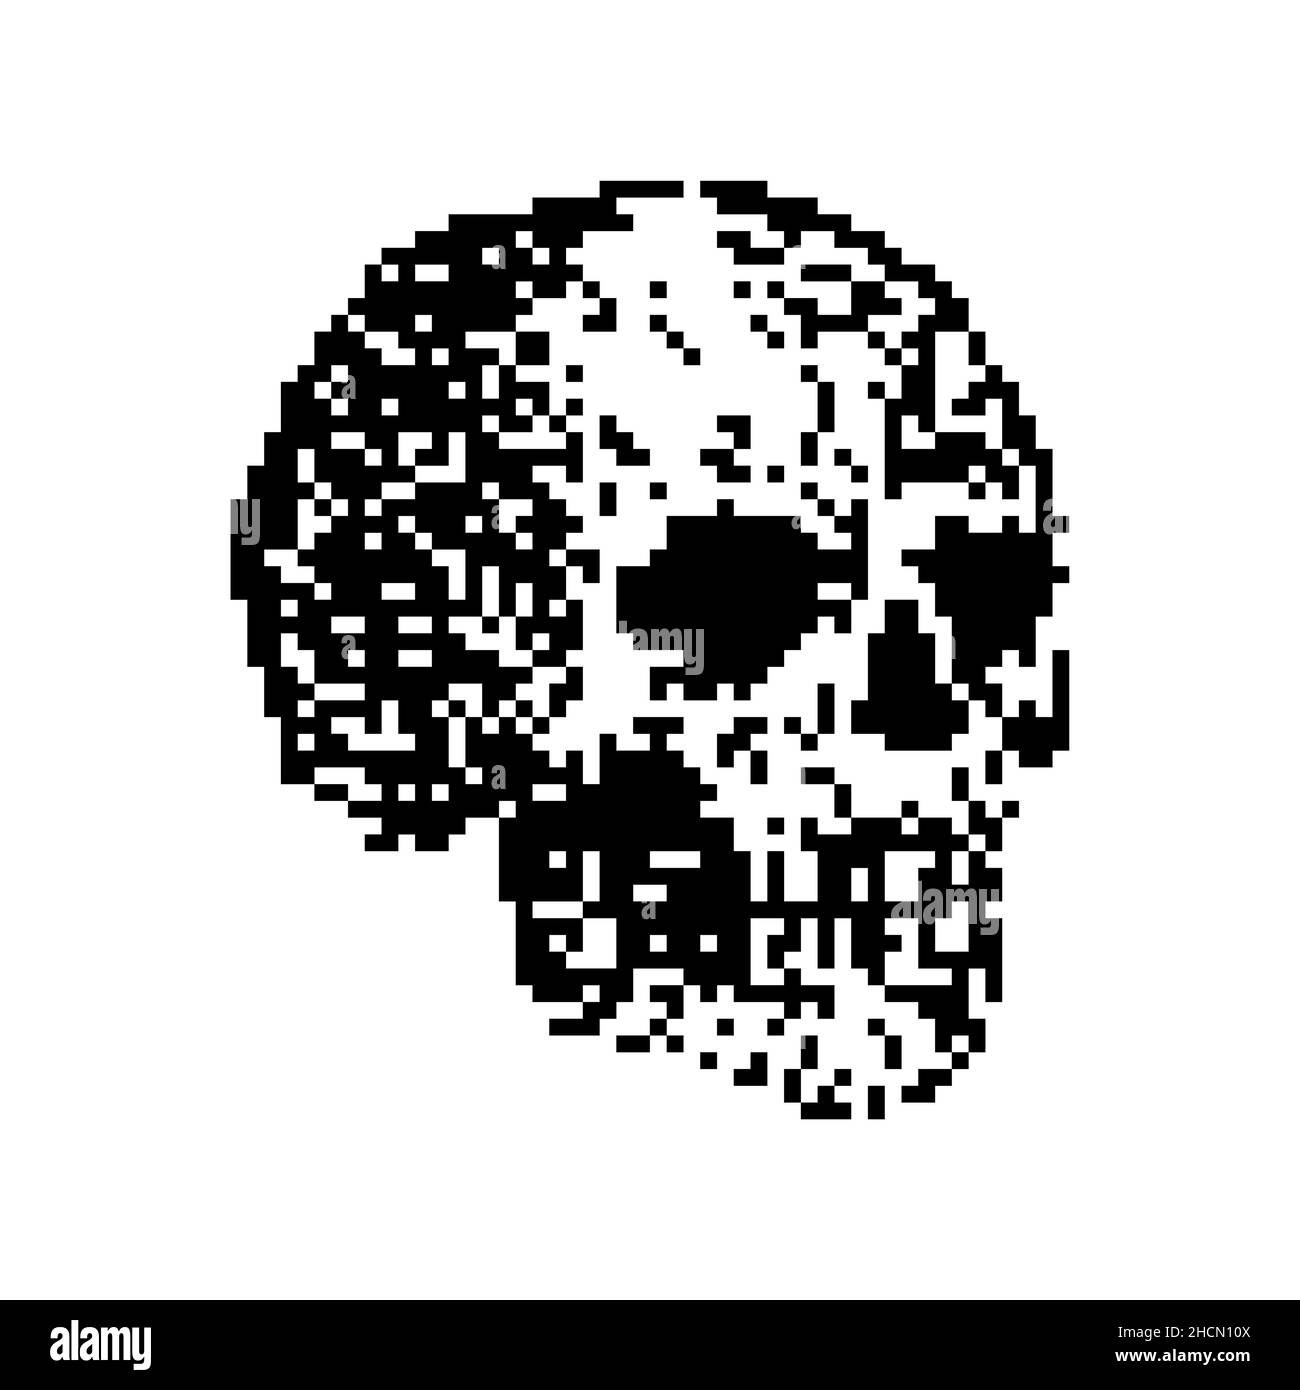 Skull pixel art. pixelated Skeleton head. 8 bit vector illustration. Old video game graphics Stock Vector